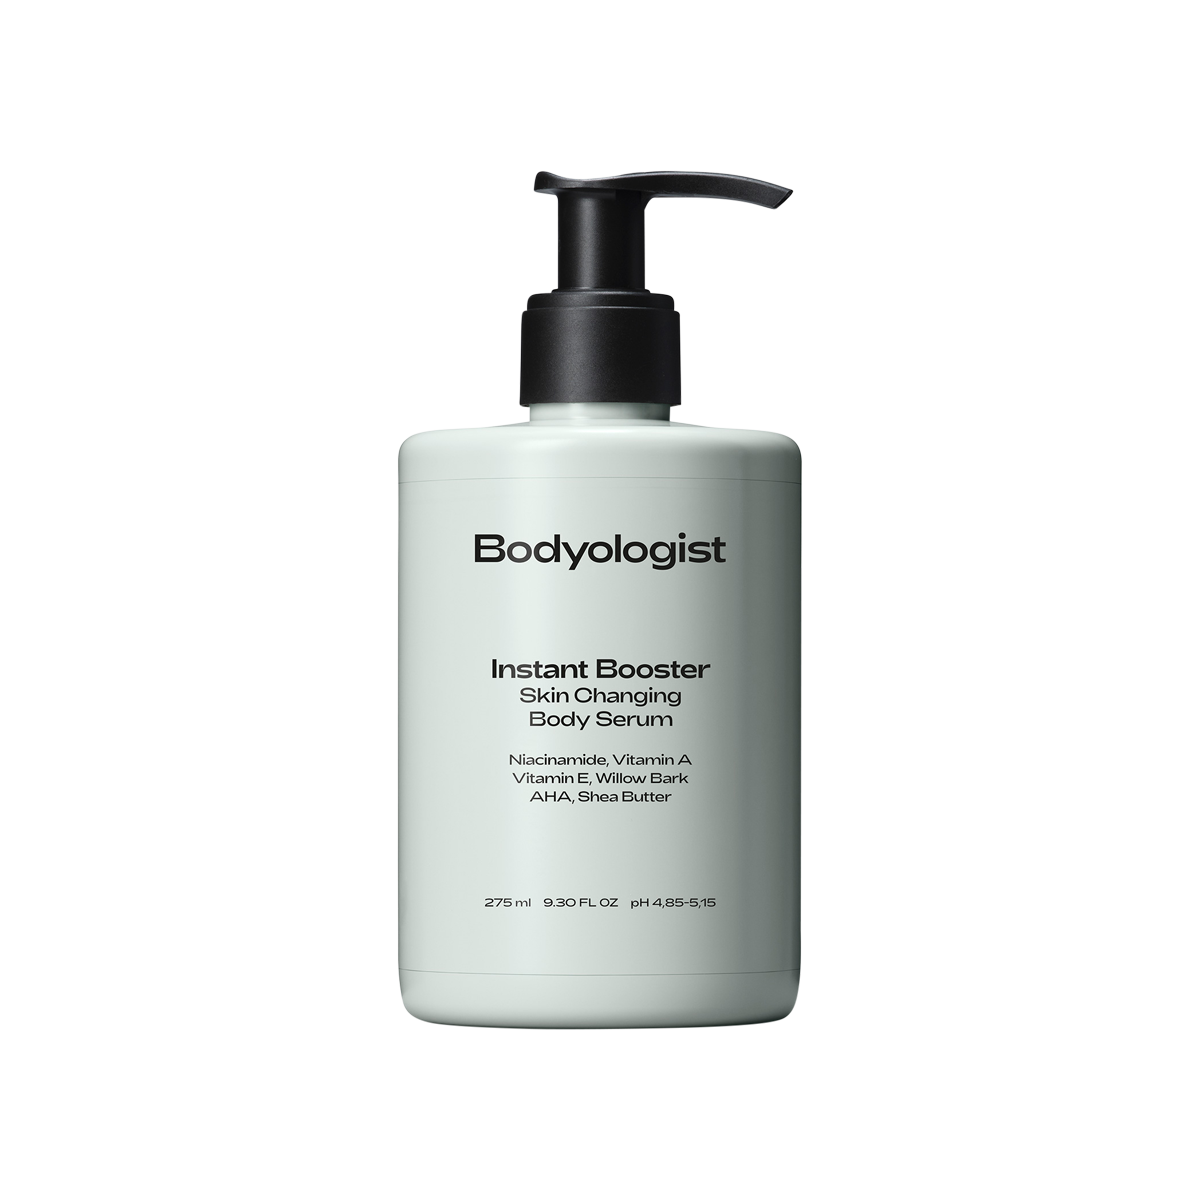 Bodyologist - Instant Booster Skin Changing Body Serum